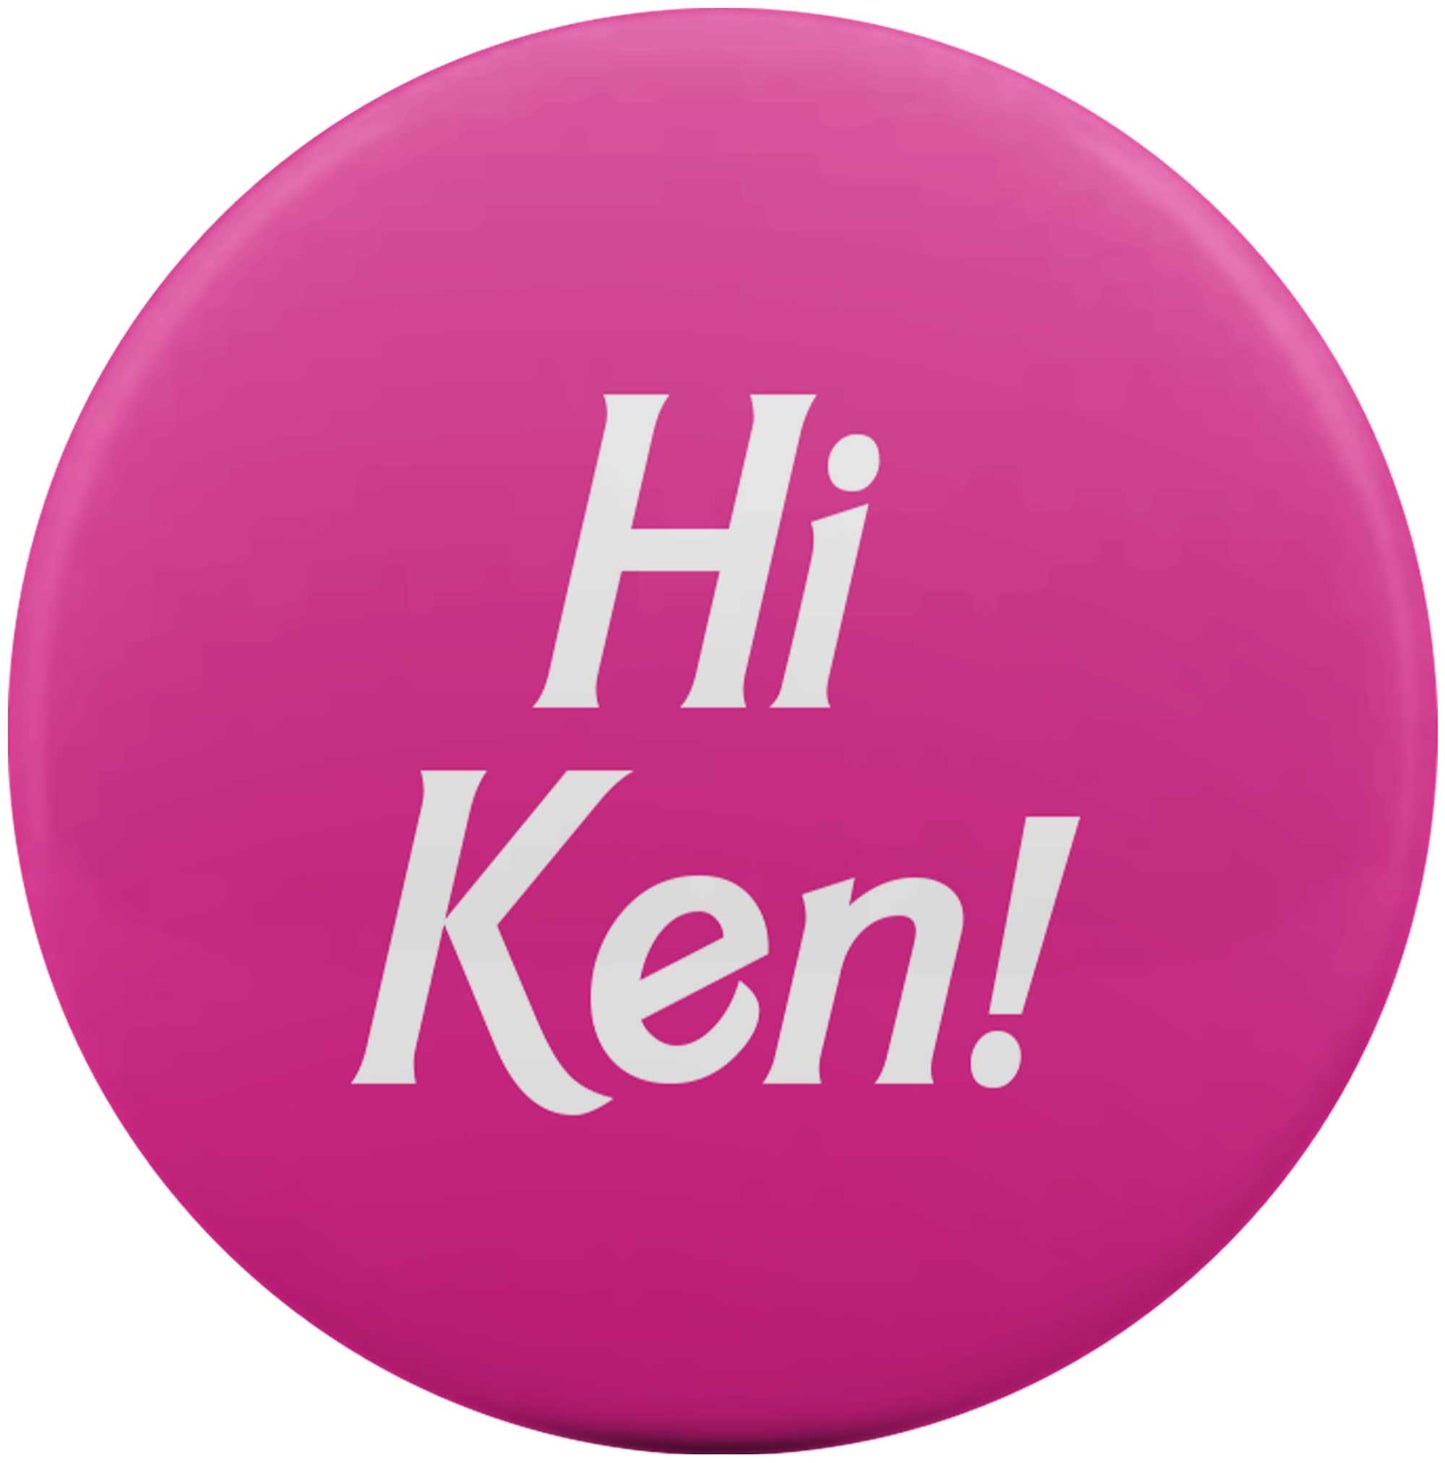 Hi Ken